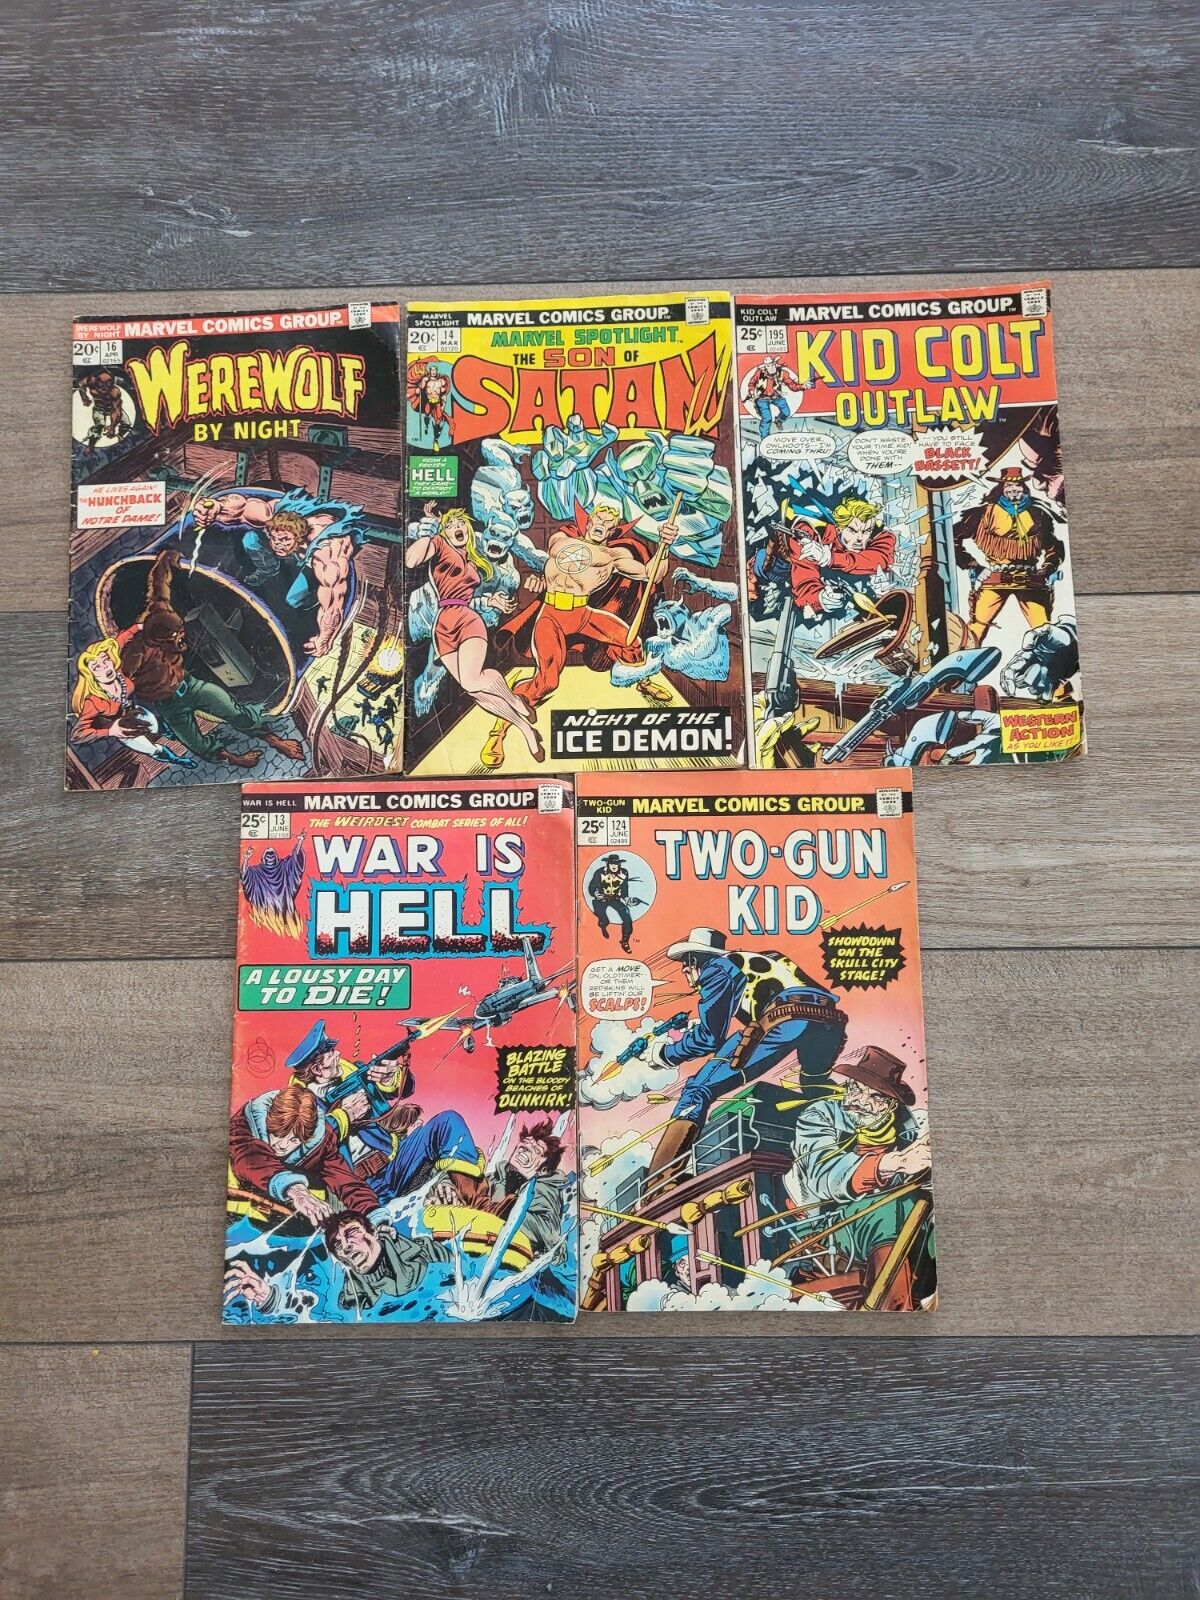 Lot Of 5 Marvel Comics Group Comics Two Gun Kid, Kid Colt Outlaw, Werewolf...